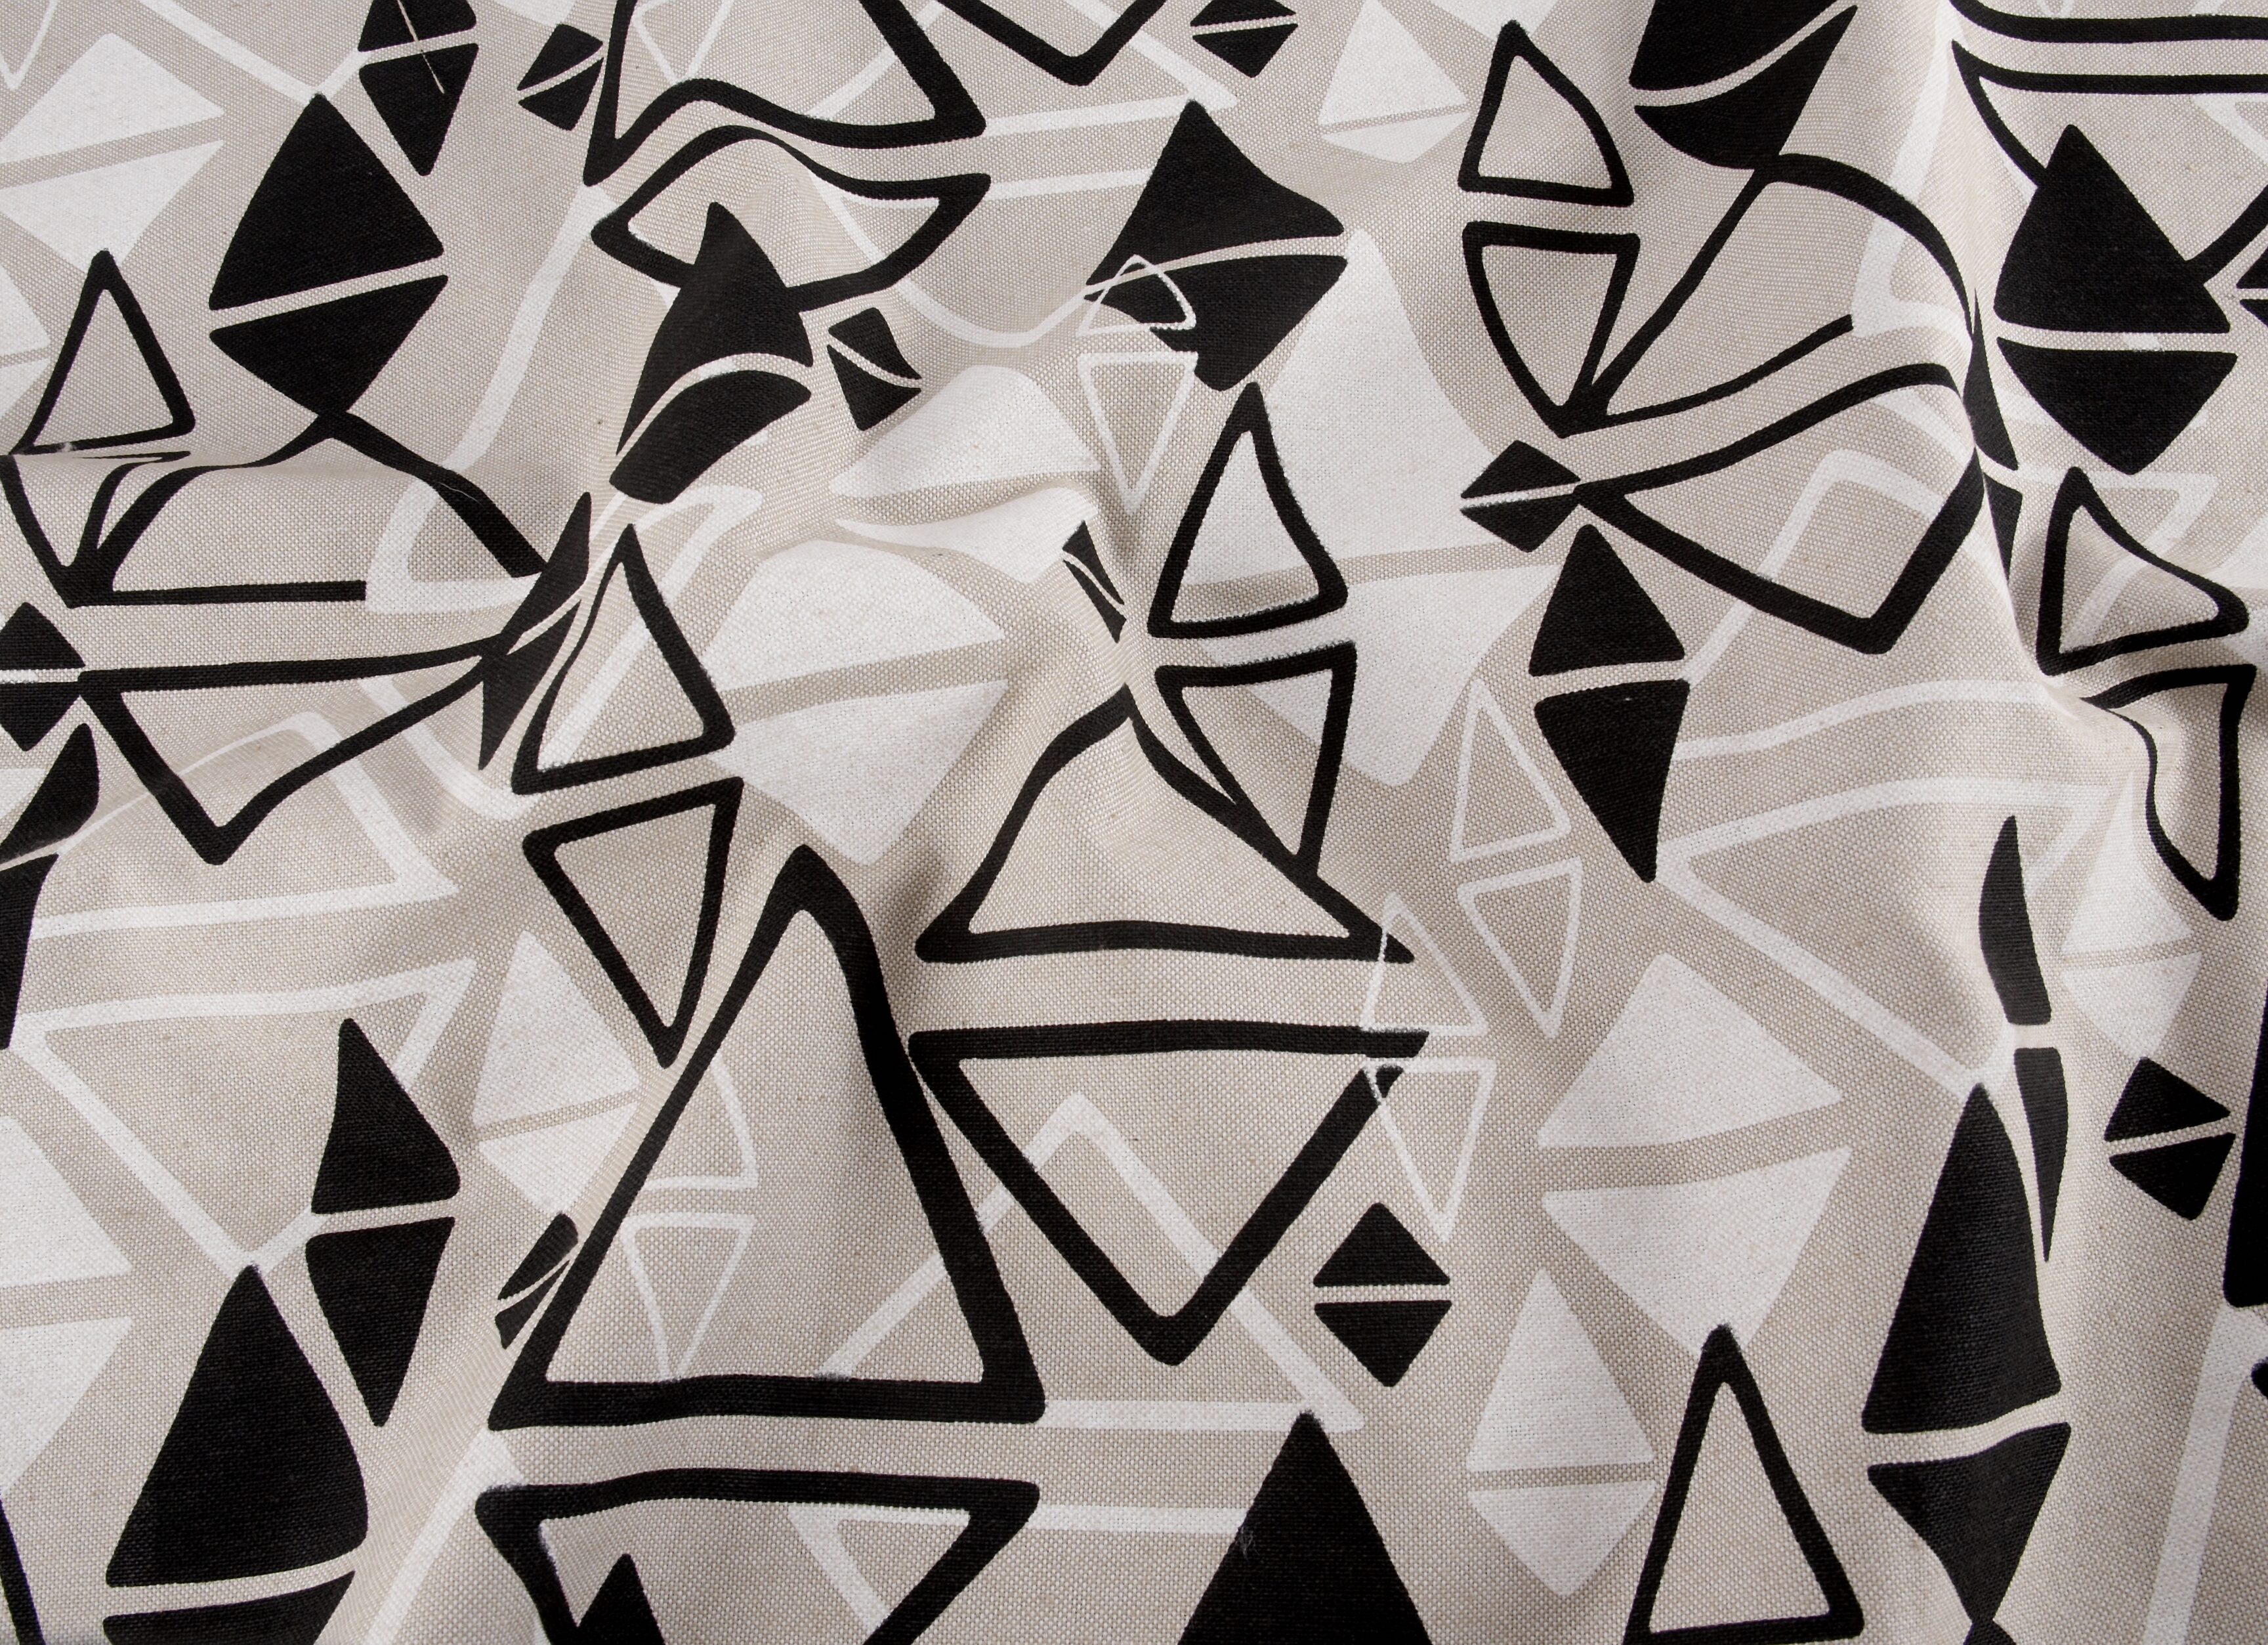 Aztec Triangle Print Linen Look Canvas - Black/Cream